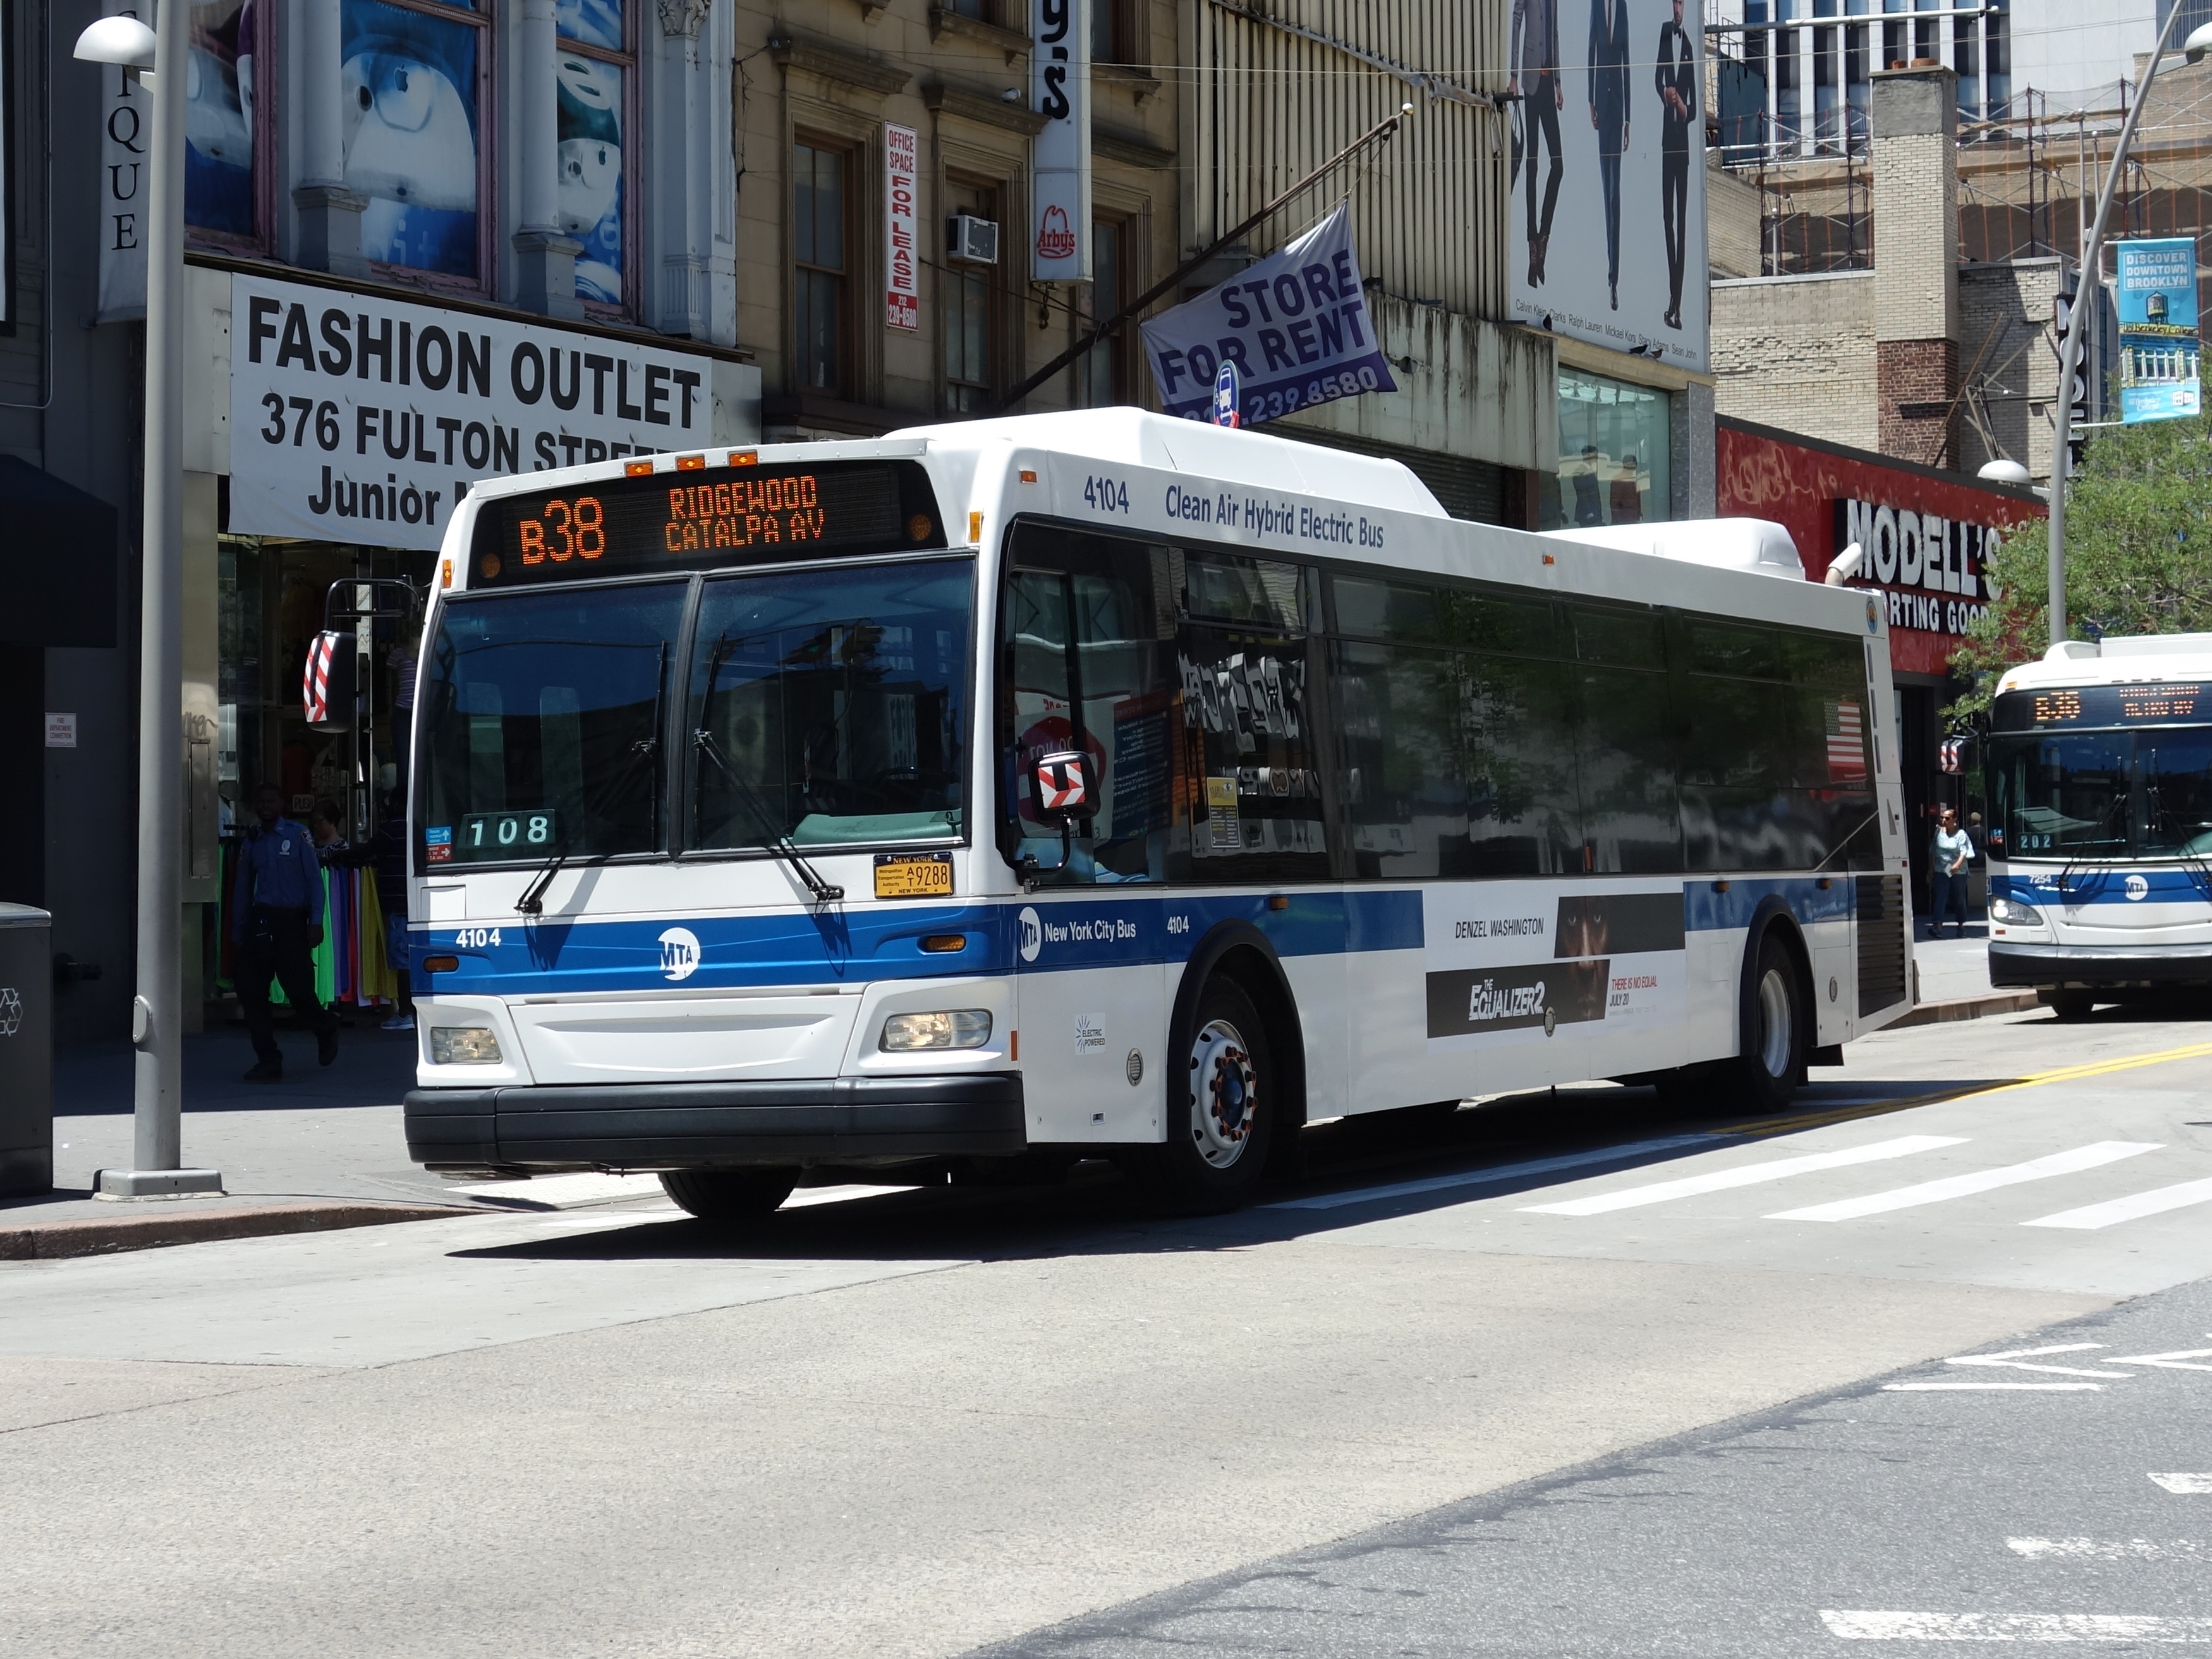 The B38 bus runs from Ridgewood to Downtown Brooklyn.